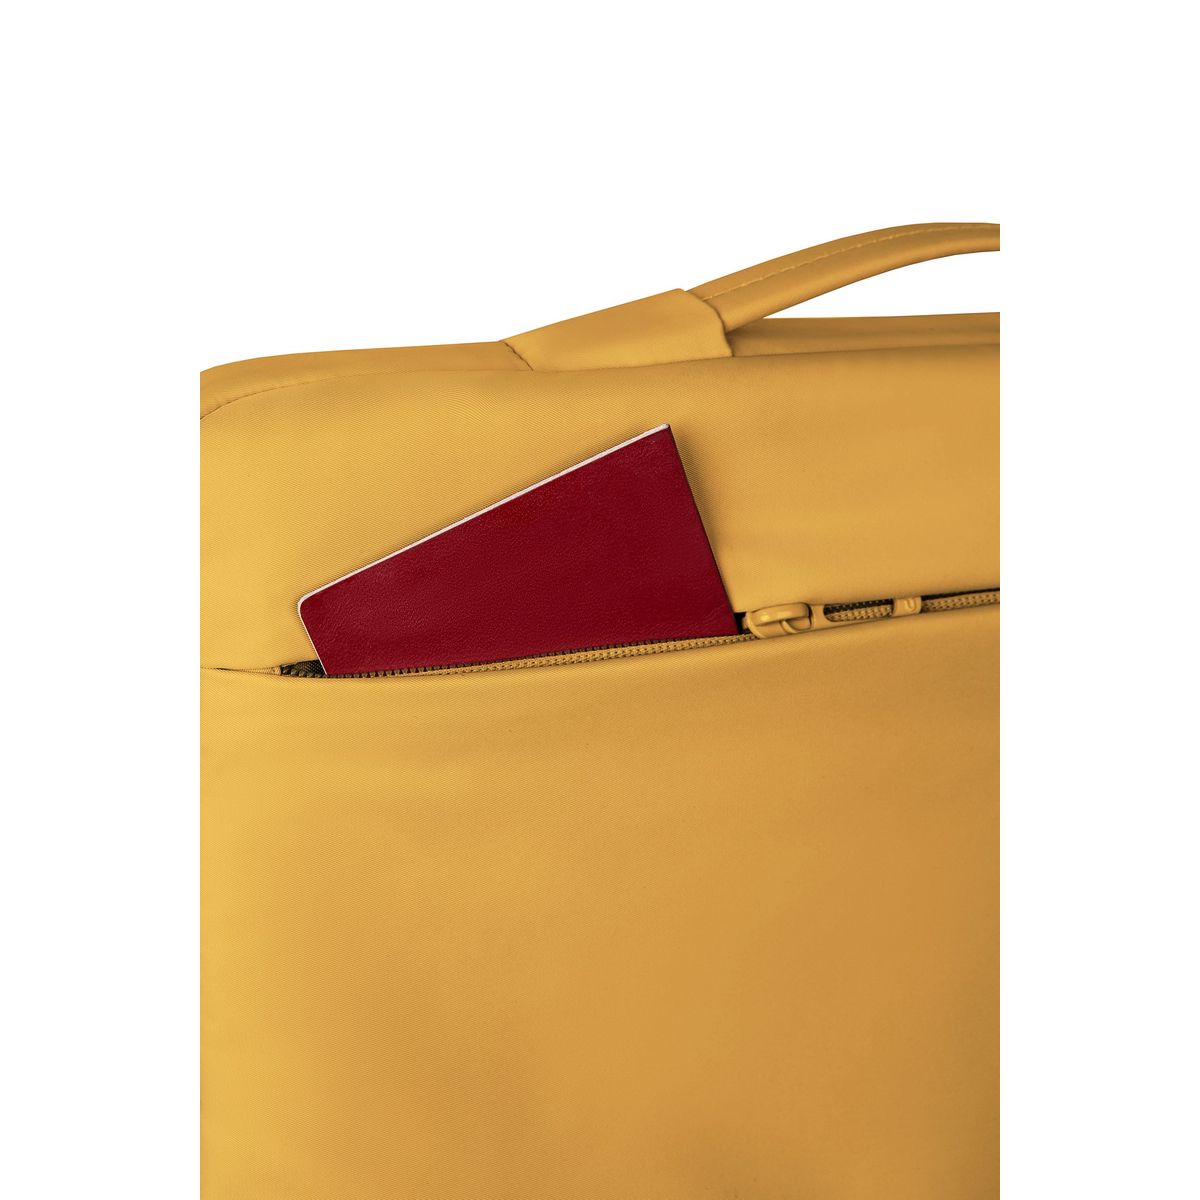 Etui na notebooka Coolpack Saturn mustard Patio (E60005)